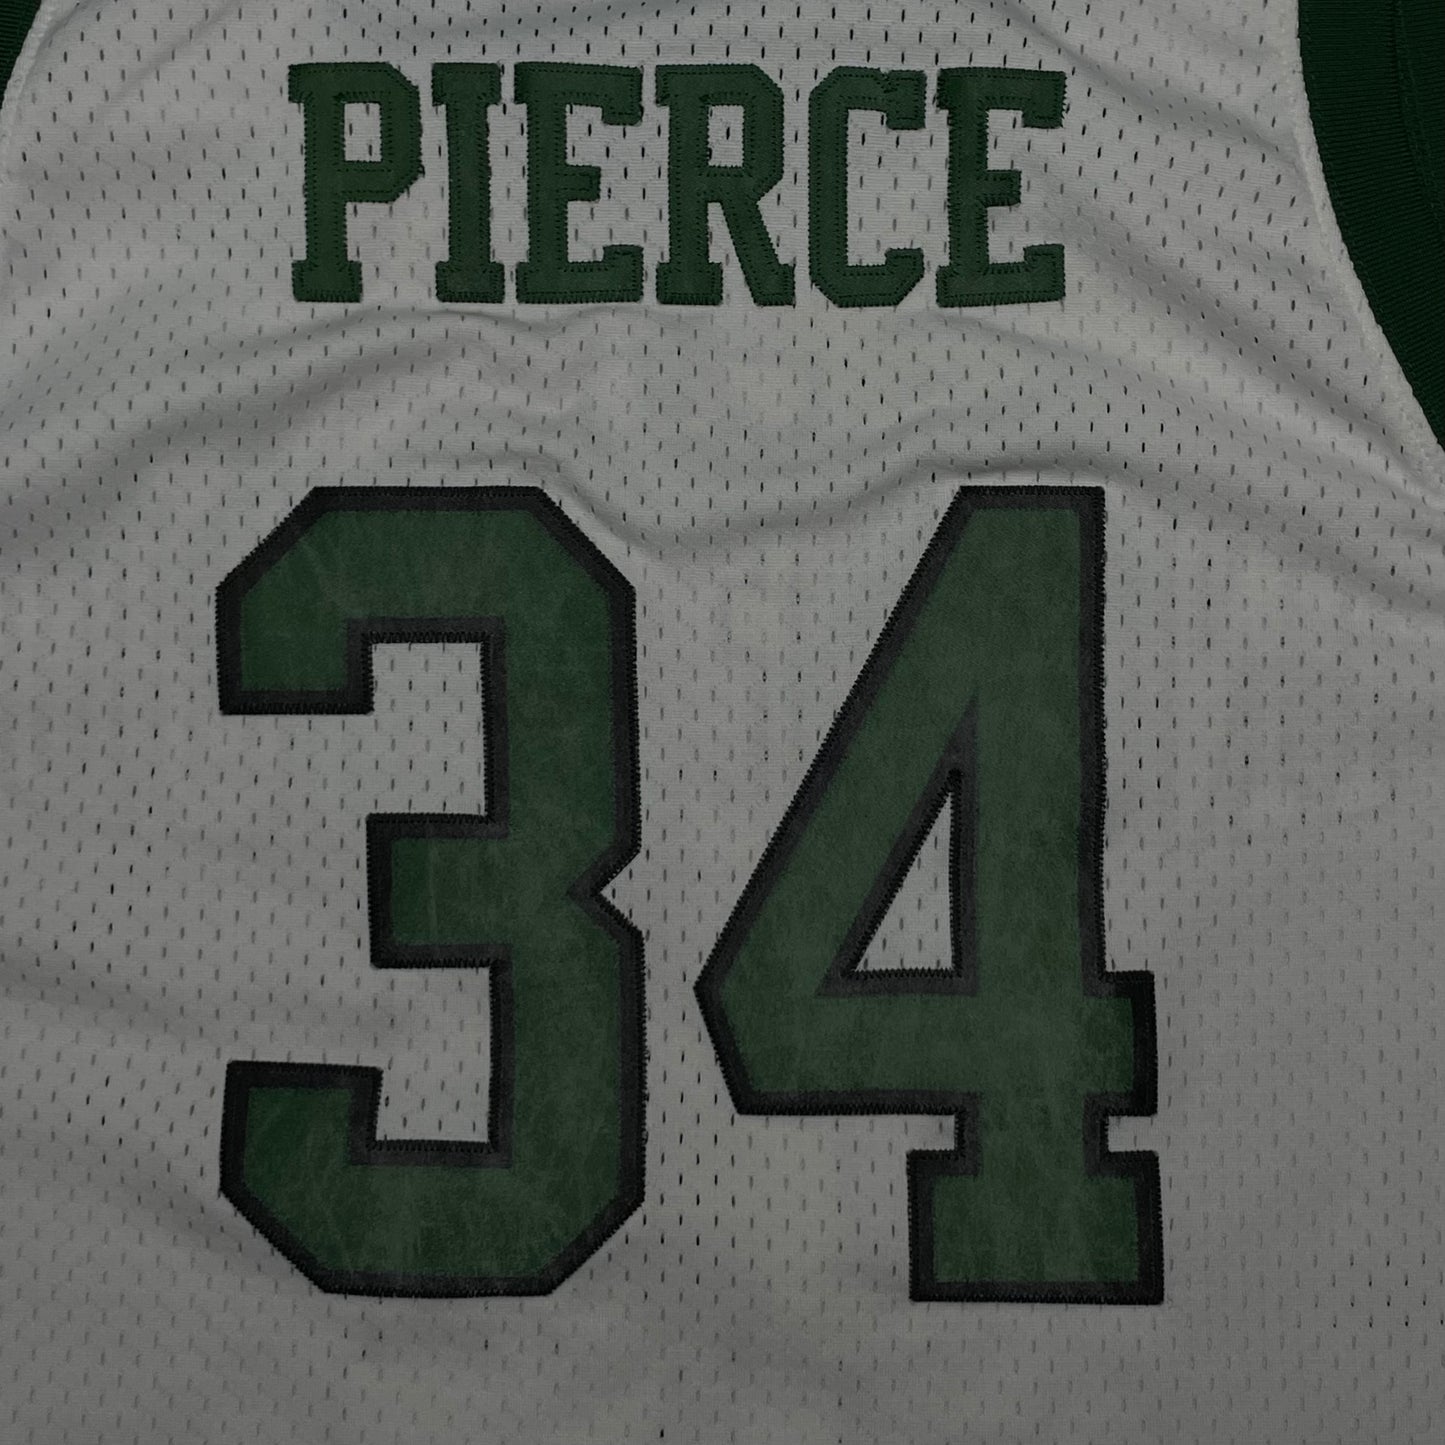 1996 Paul Pierce Inglewood High School (XL)